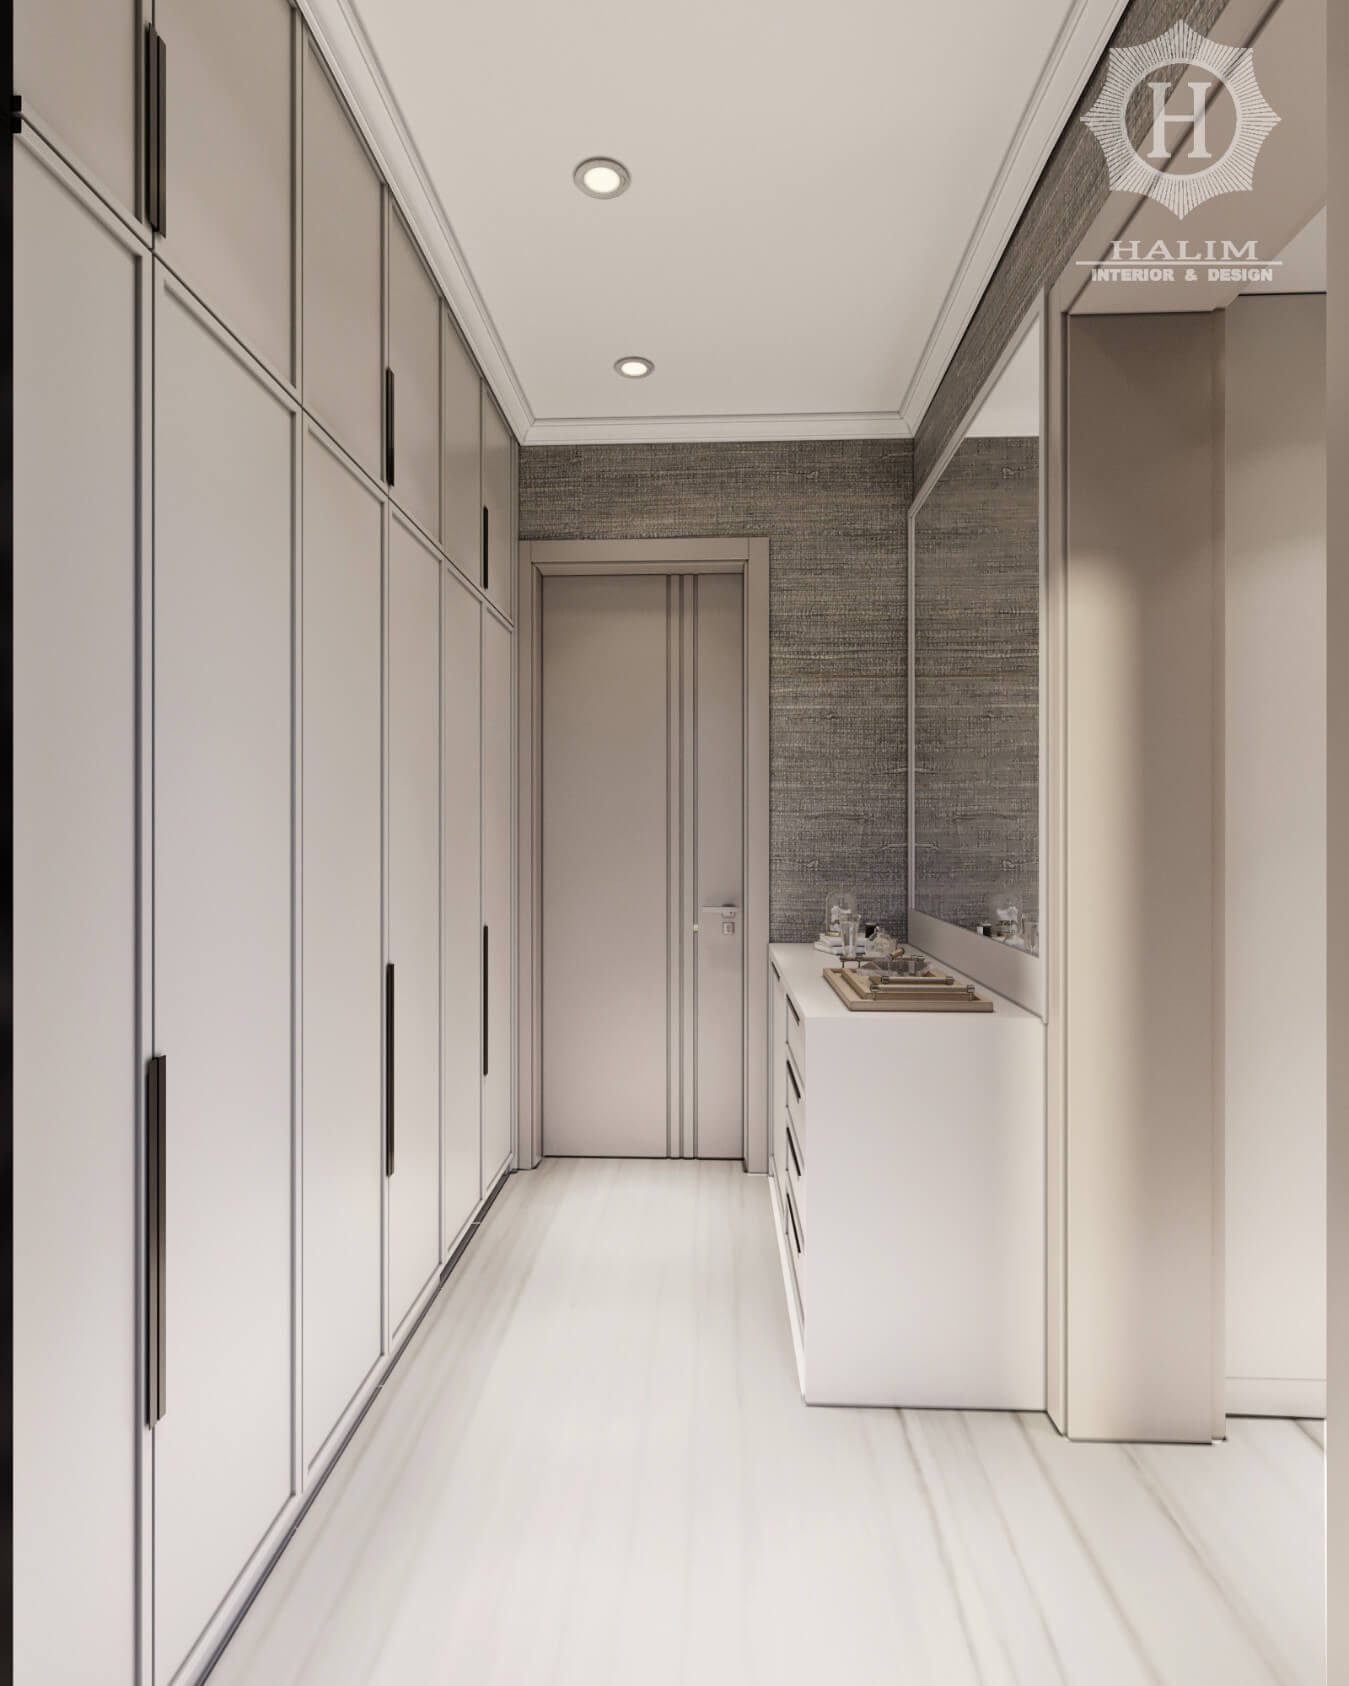 Halim Interior modern furniture contemporer american style minimalist european classic surabaya 75.PUNCAK PERMAI